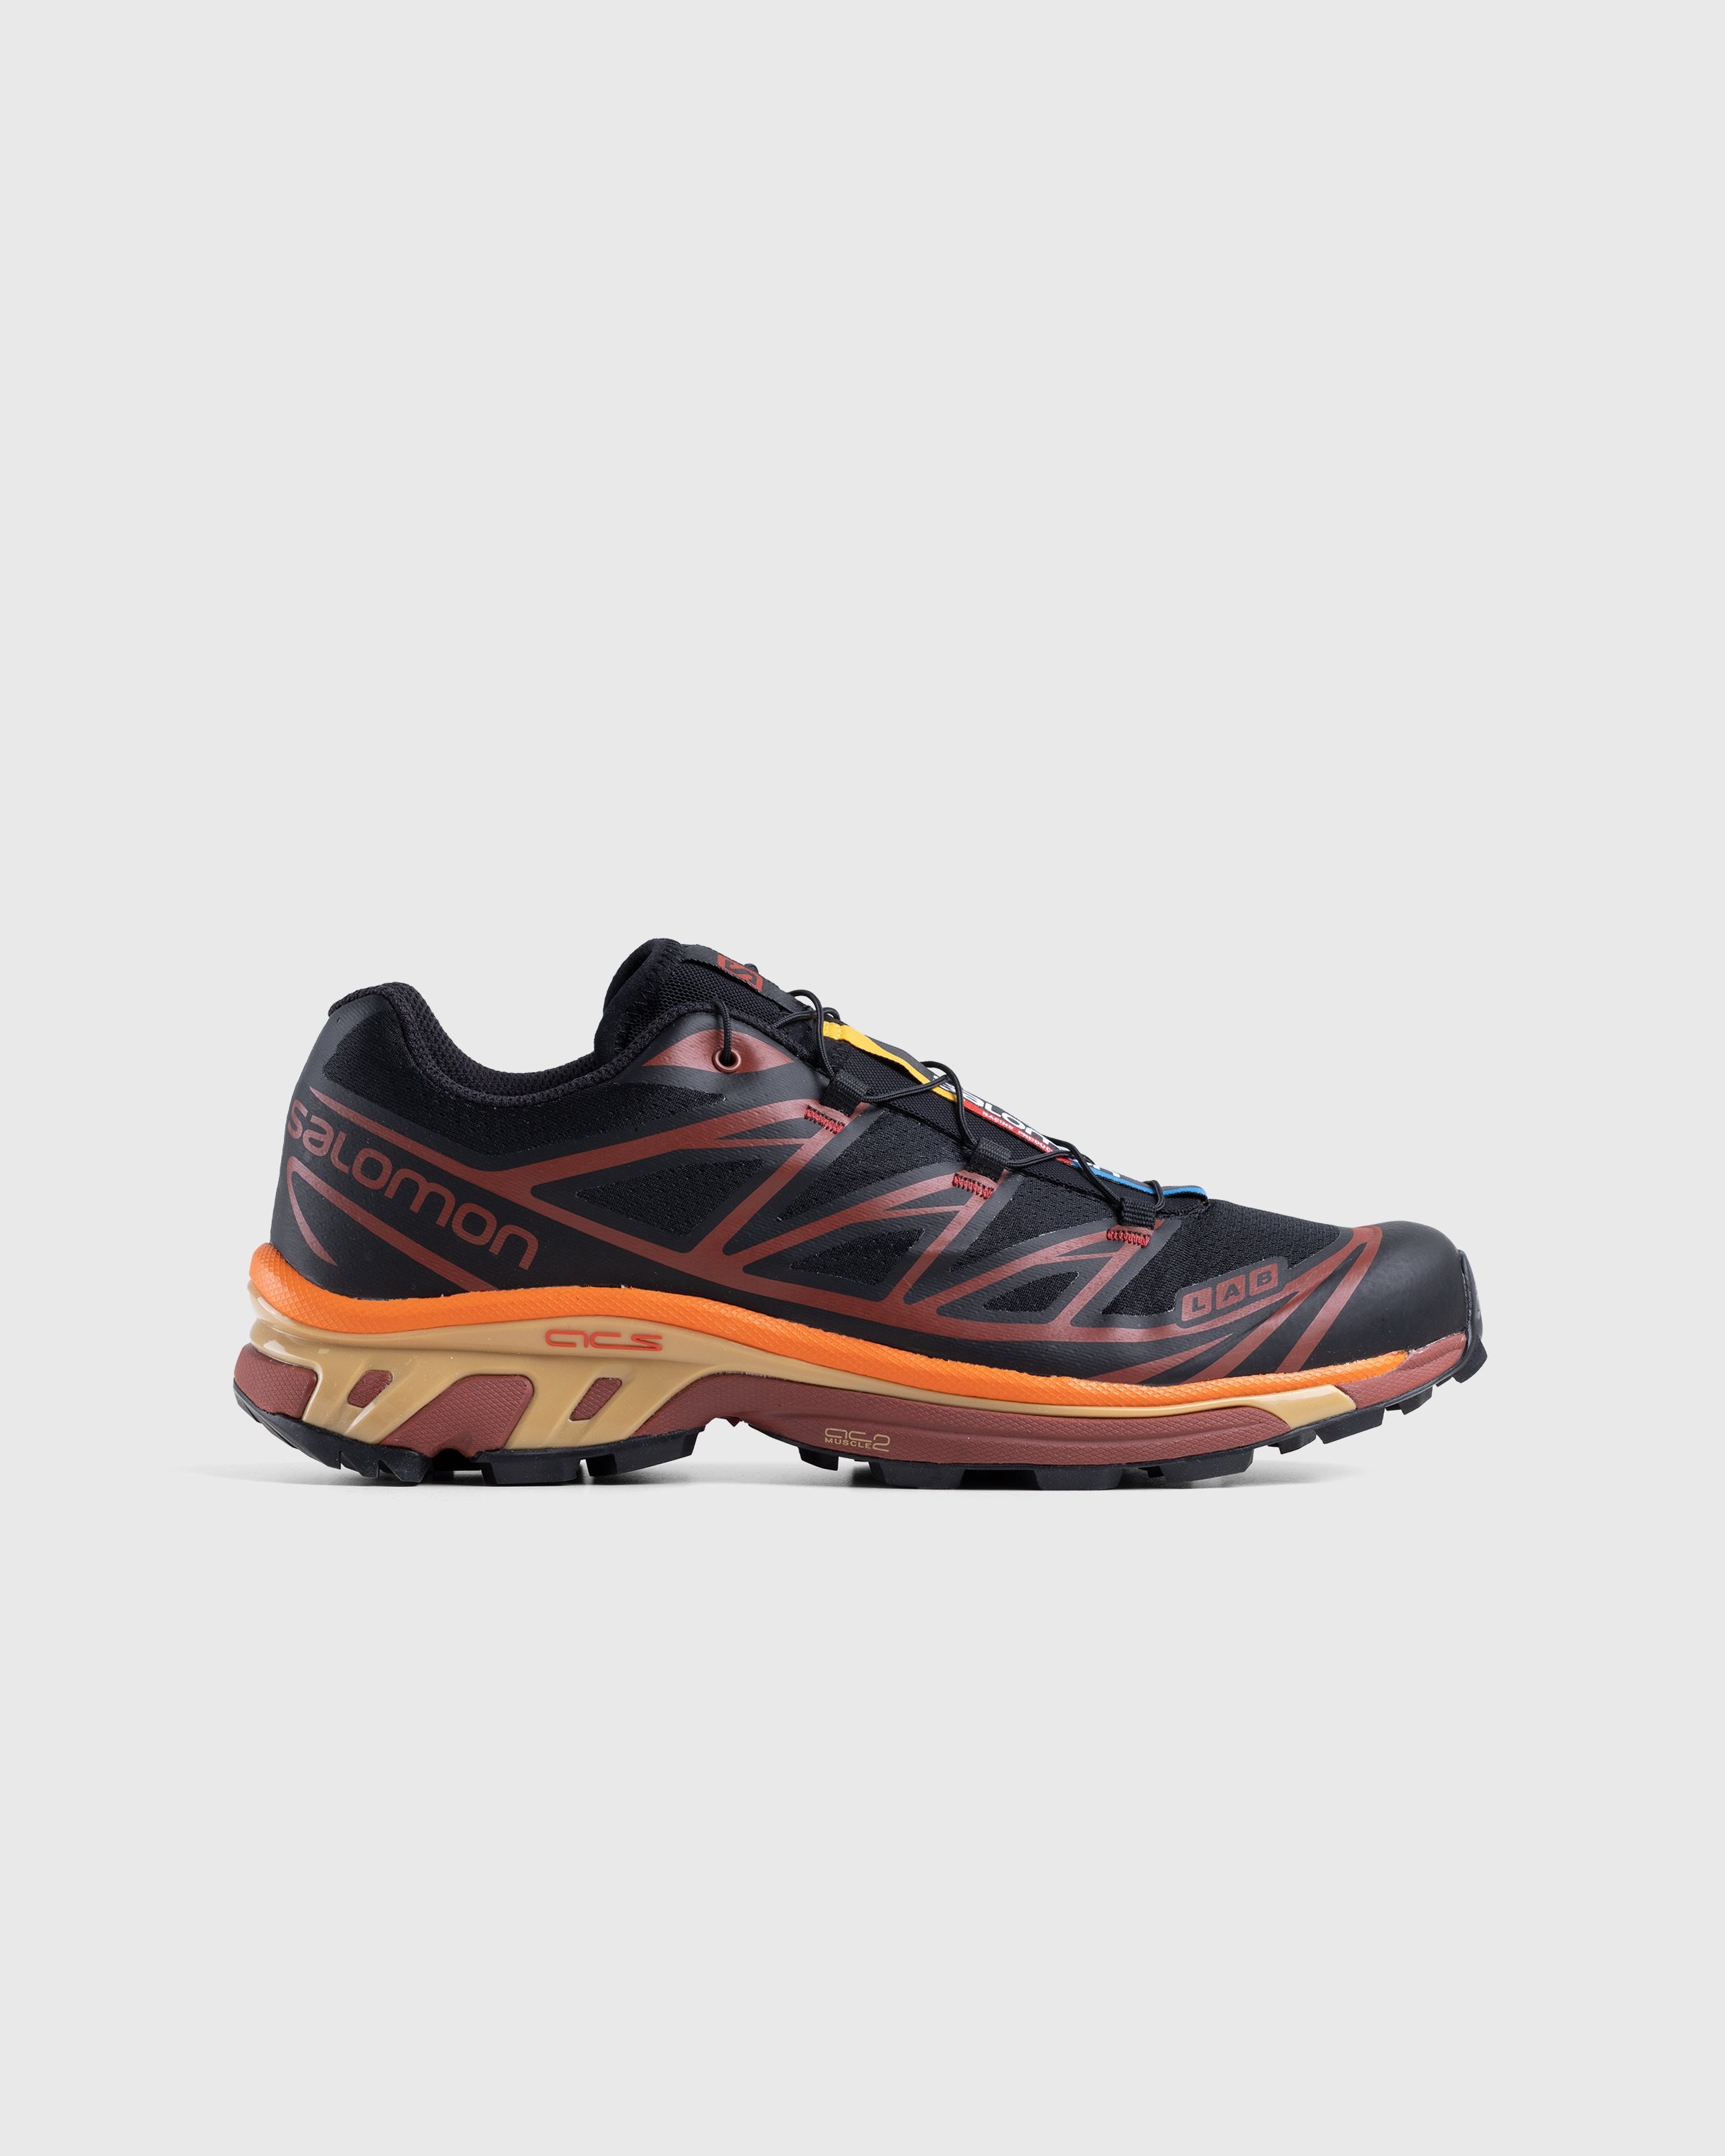 Salomon – XT-6 Black/Chocolate Plum/Vibrant Orange - Sneakers - Brown - Image 1